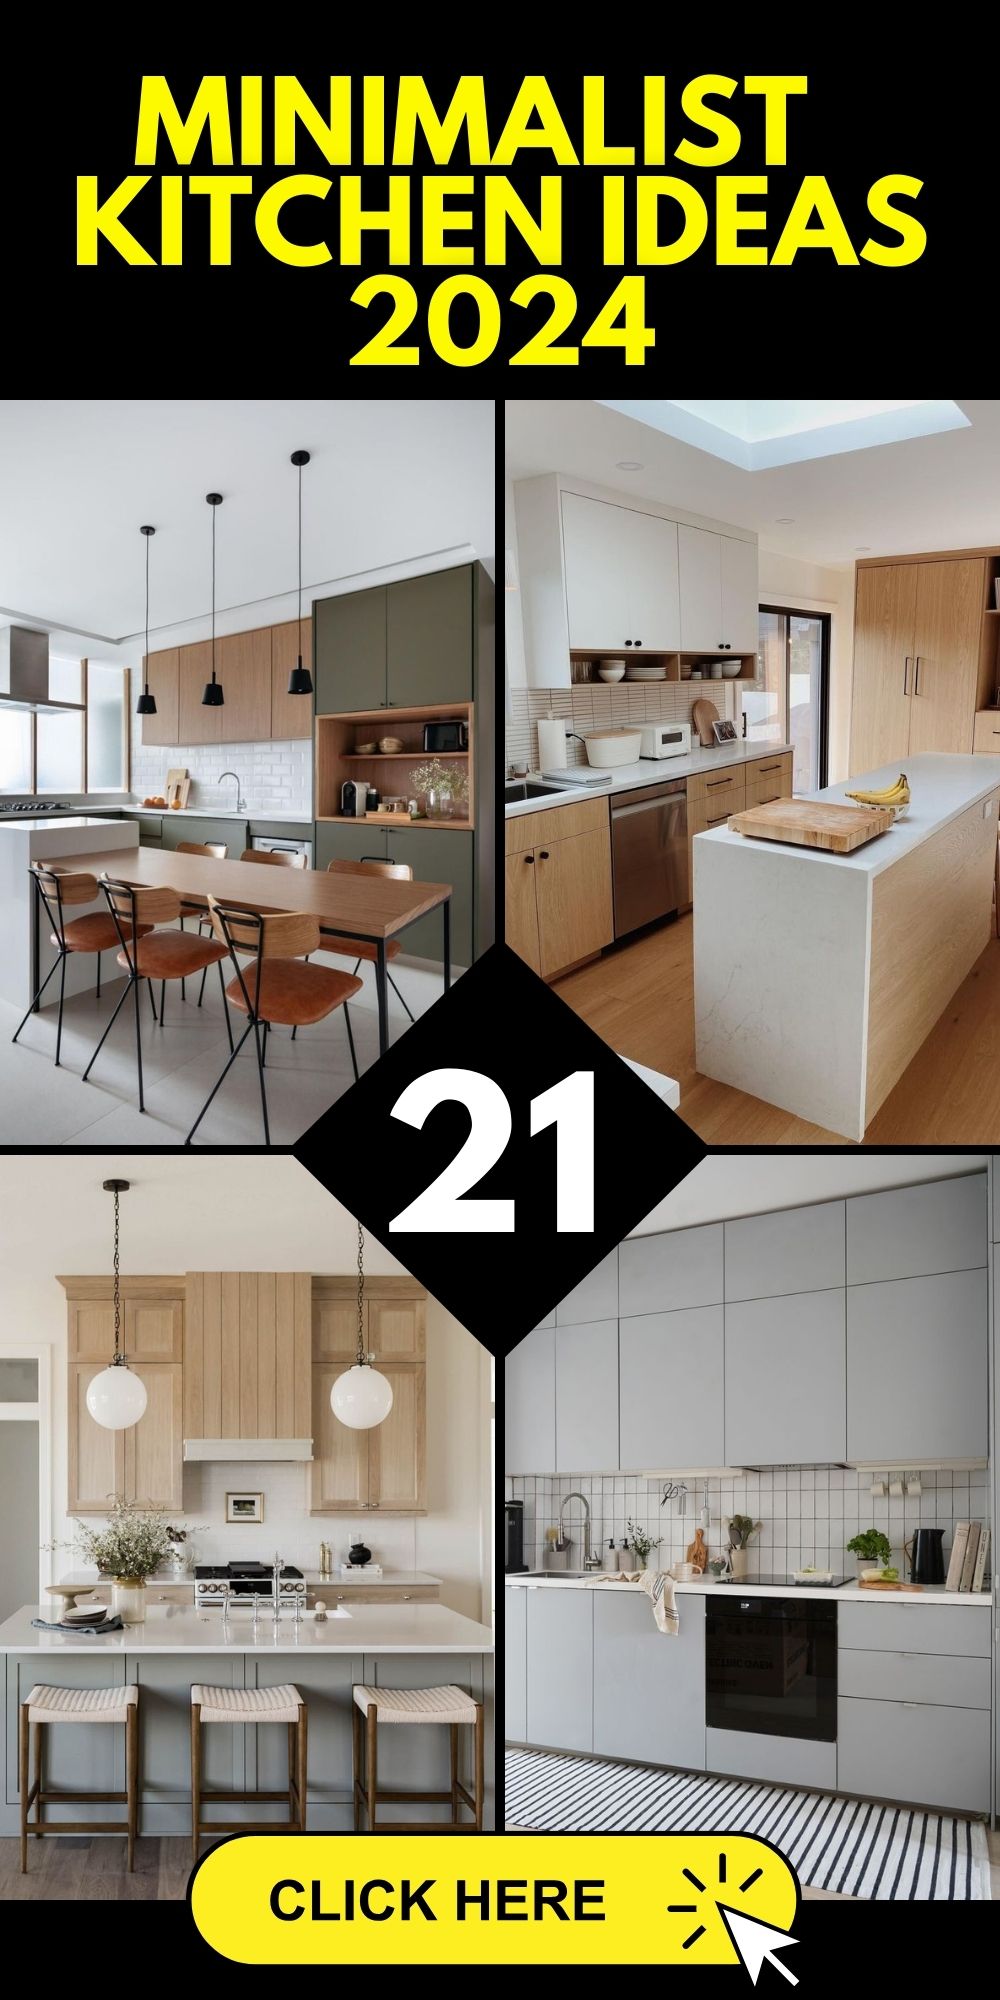 Minimalist Kitchen Ideas 2024: Modern, Cozy Designs For Small Spaces ...